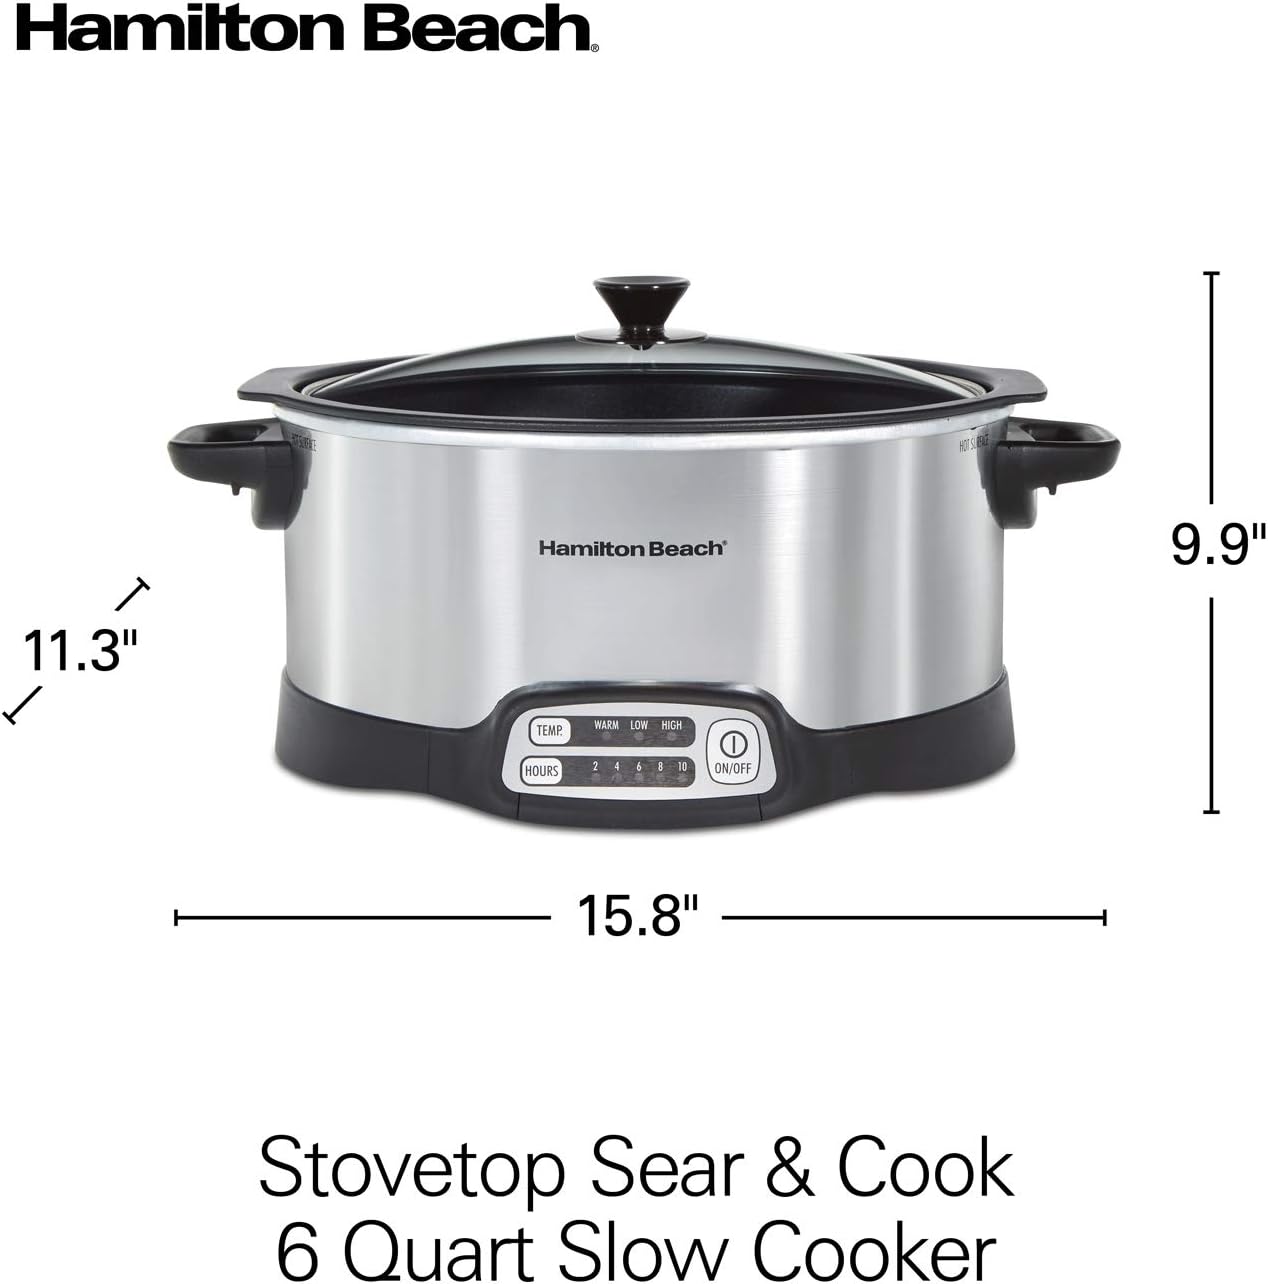 Hamilton Beach Programmable 6 Quart Slow Cooker